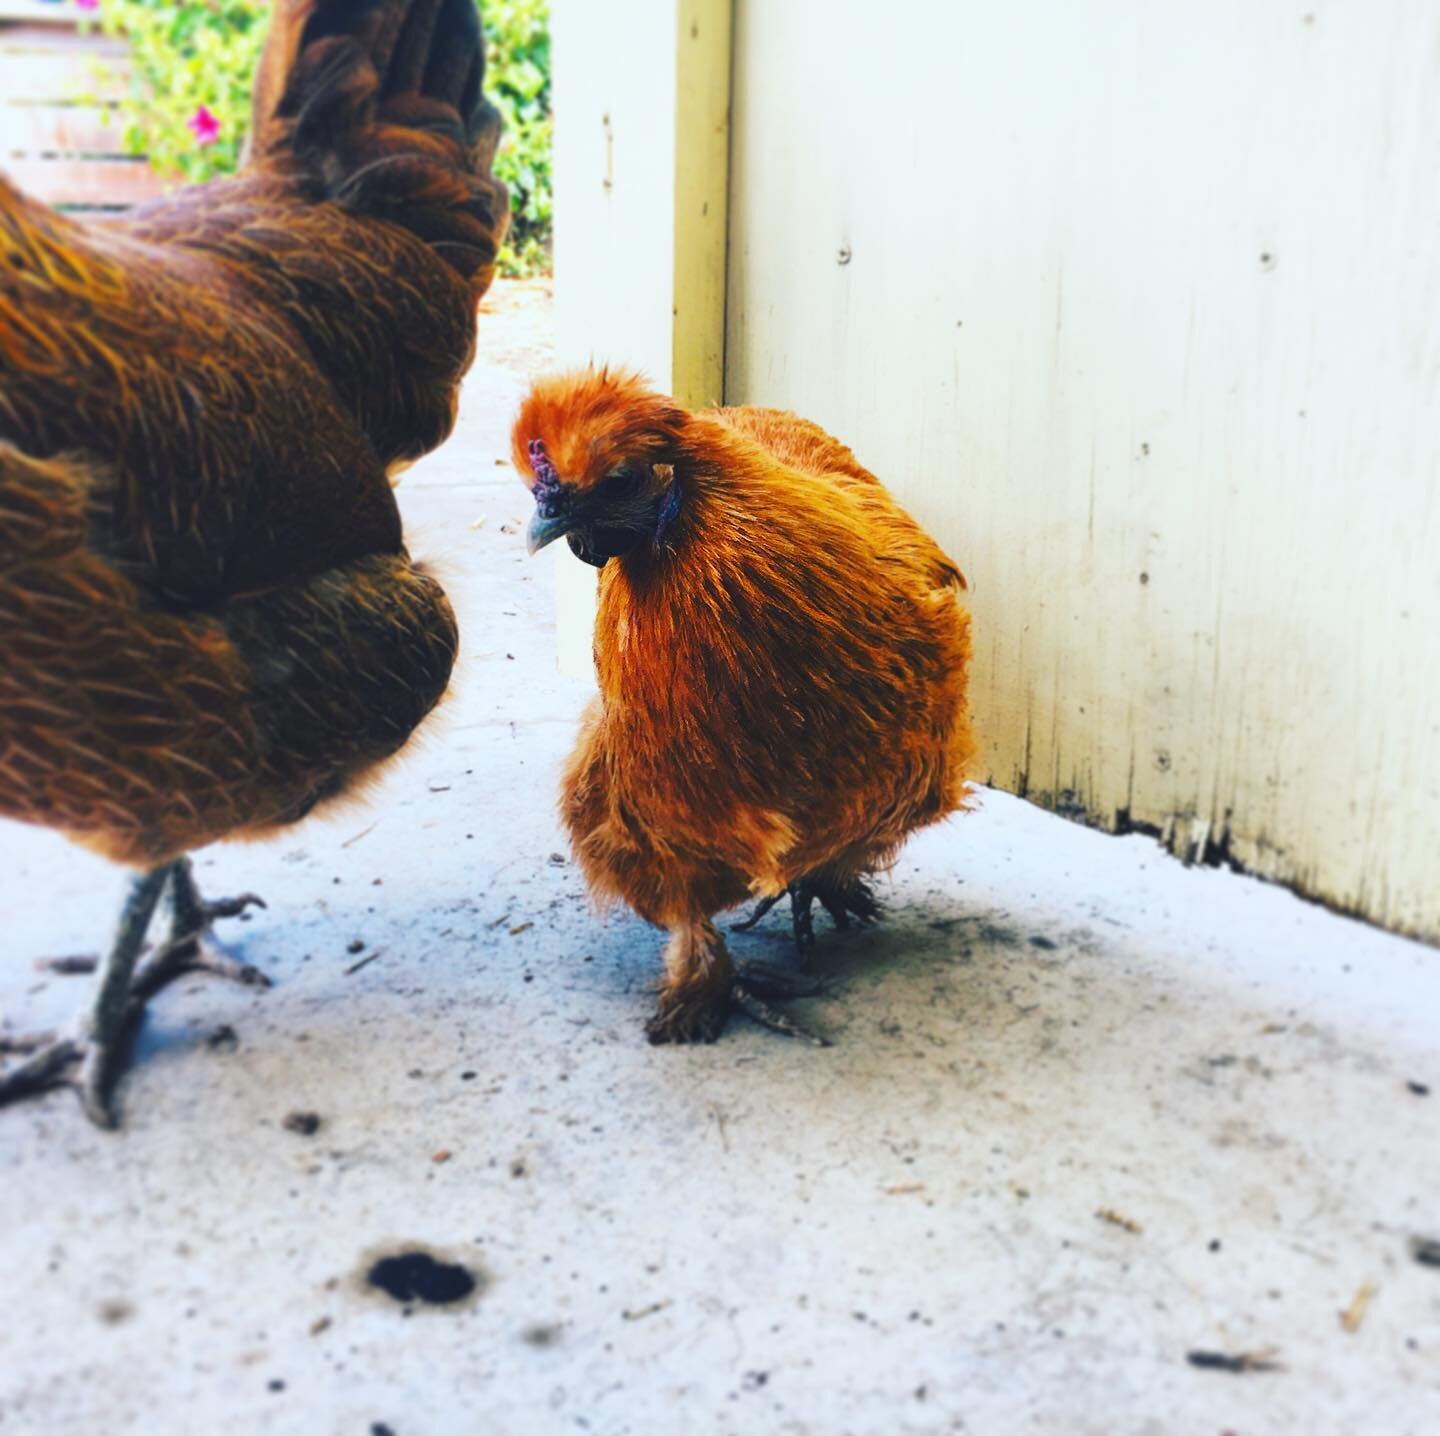 Little Wing. Big Attitude.
My social distancing buddy.

#chicken #chickensofinstagram #bird #birdsofinstagram #bantam